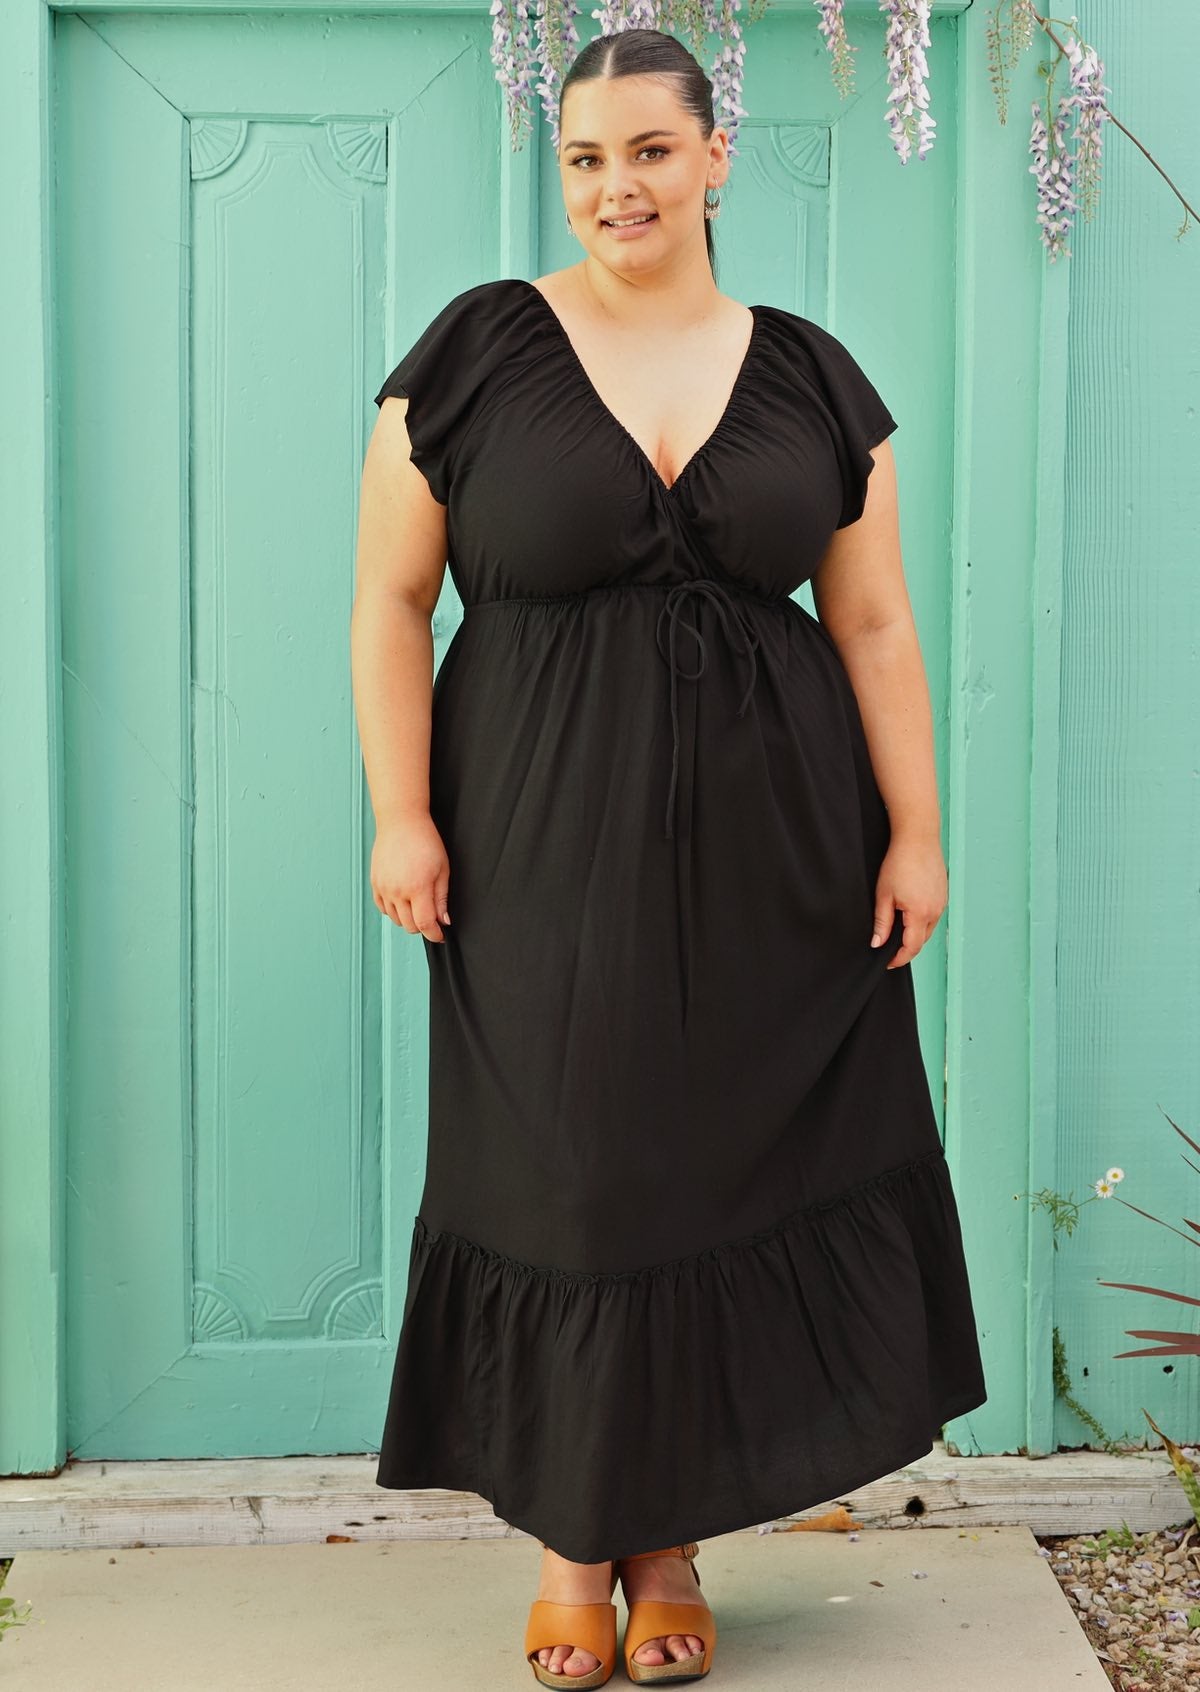 size 18 woman wearing black maxi dress